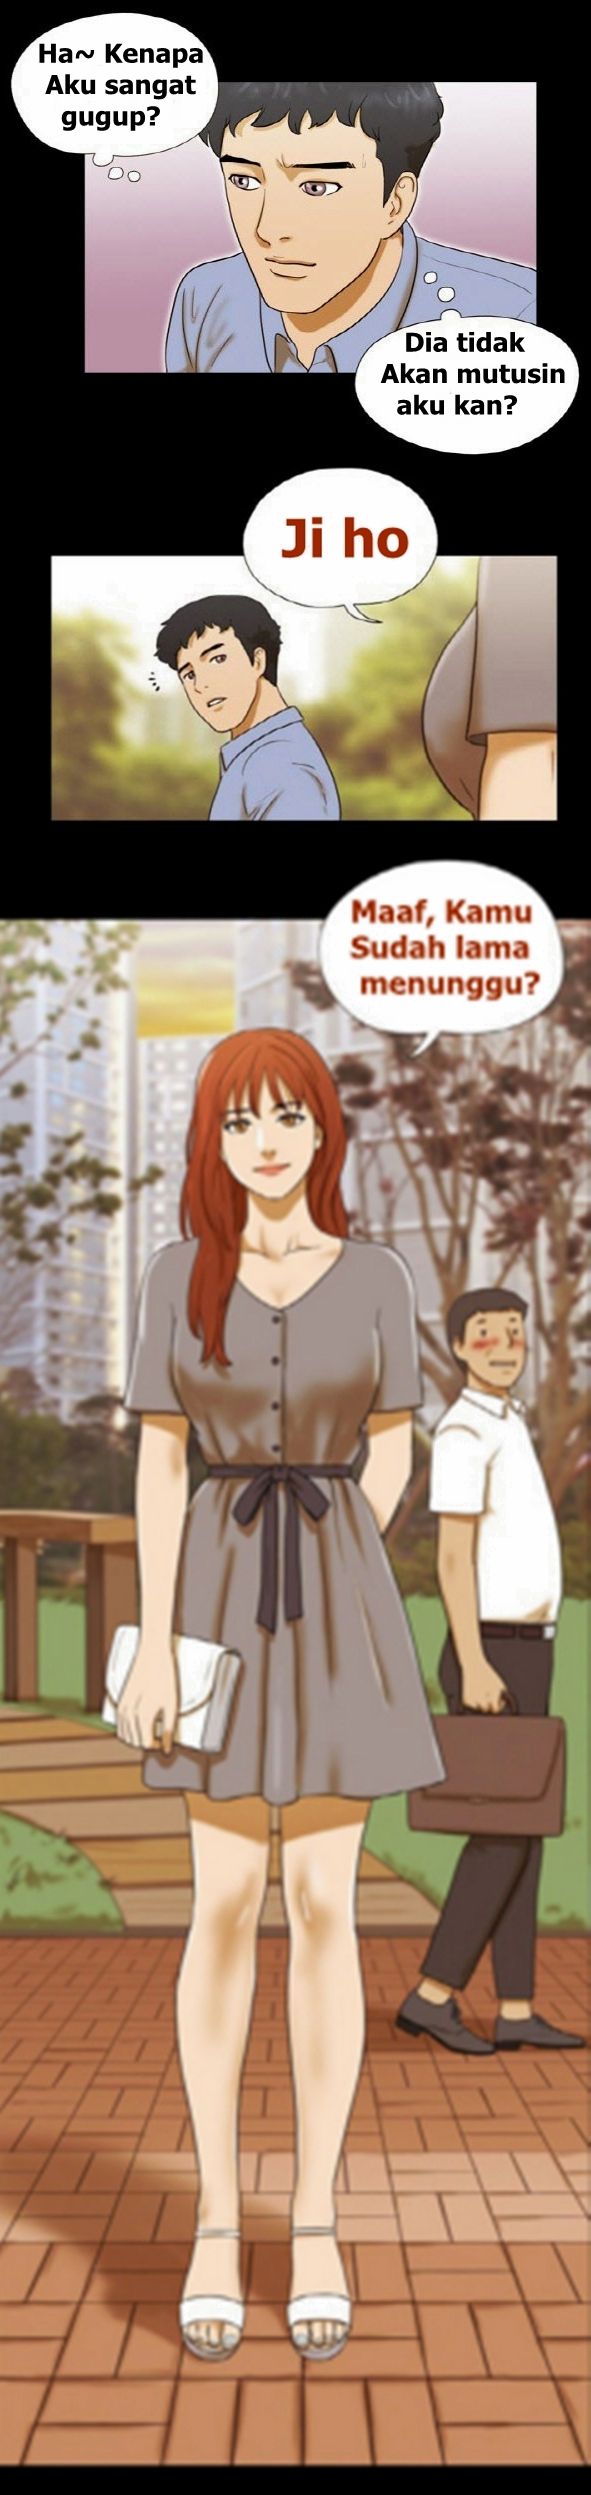 17 couple game sexual fantasy (Bahasa Indonesia) on going 성판17:커플게임